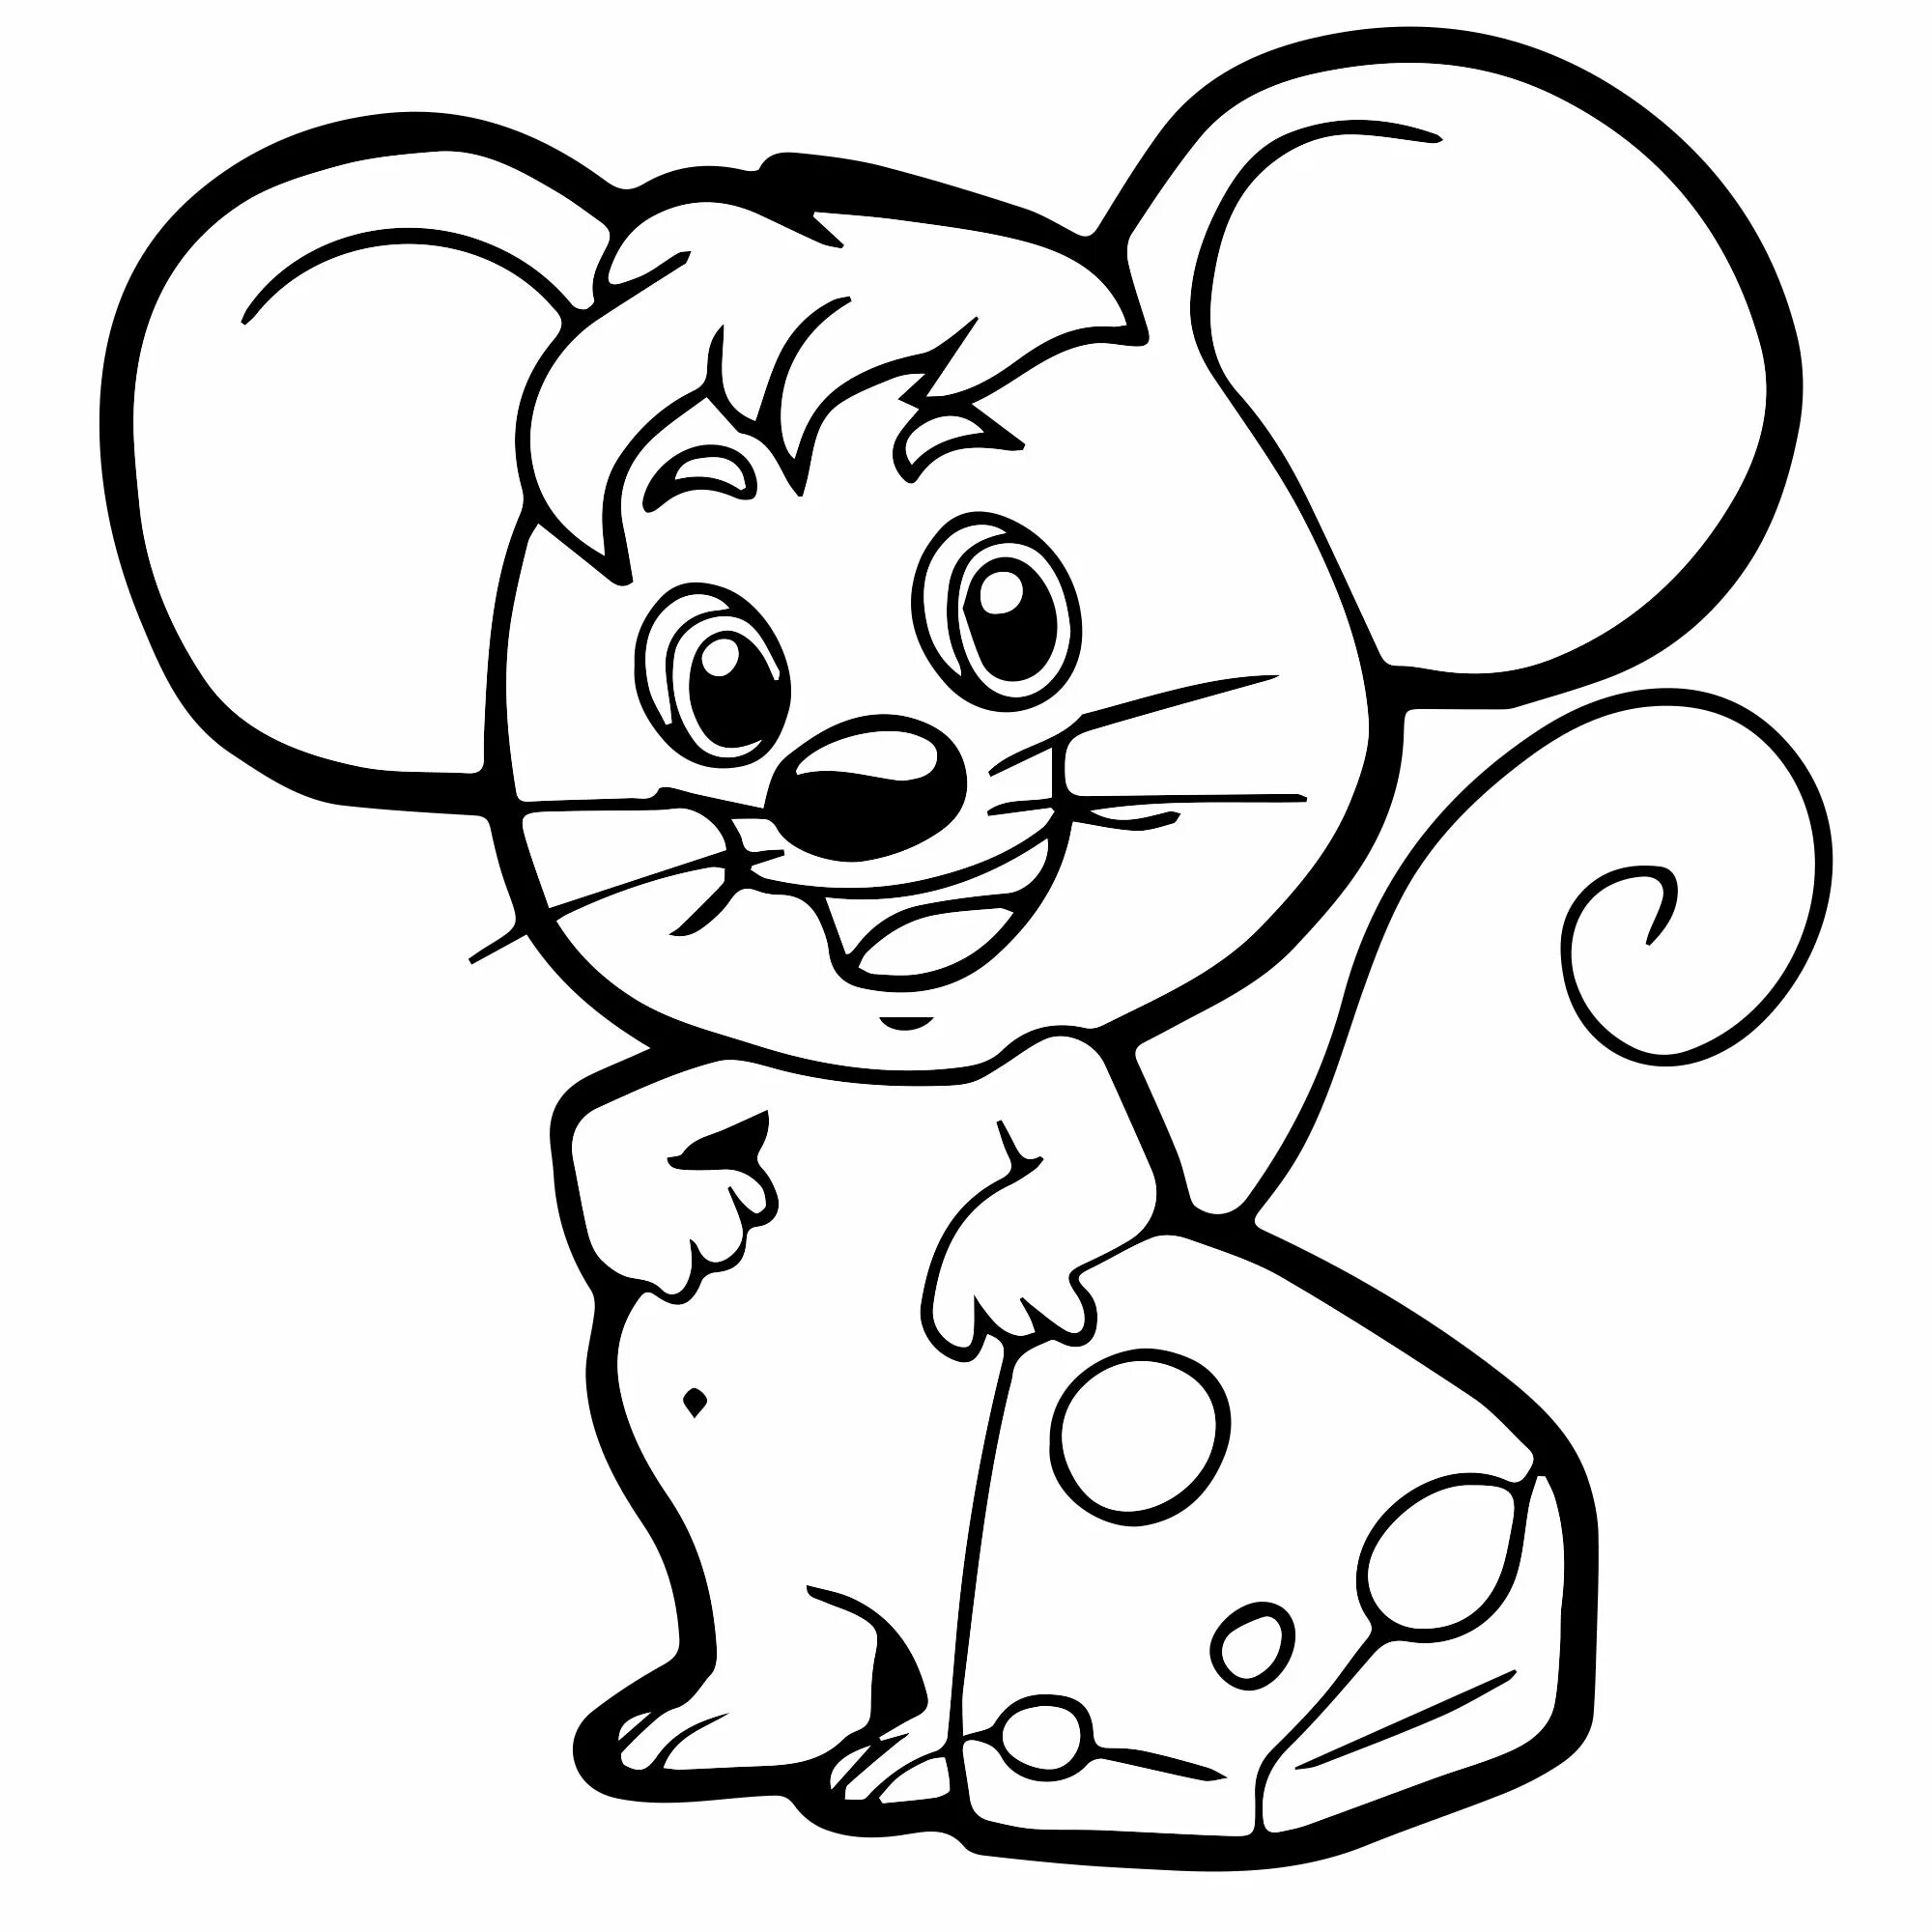 Цветная яркая раскраска мышь для детей